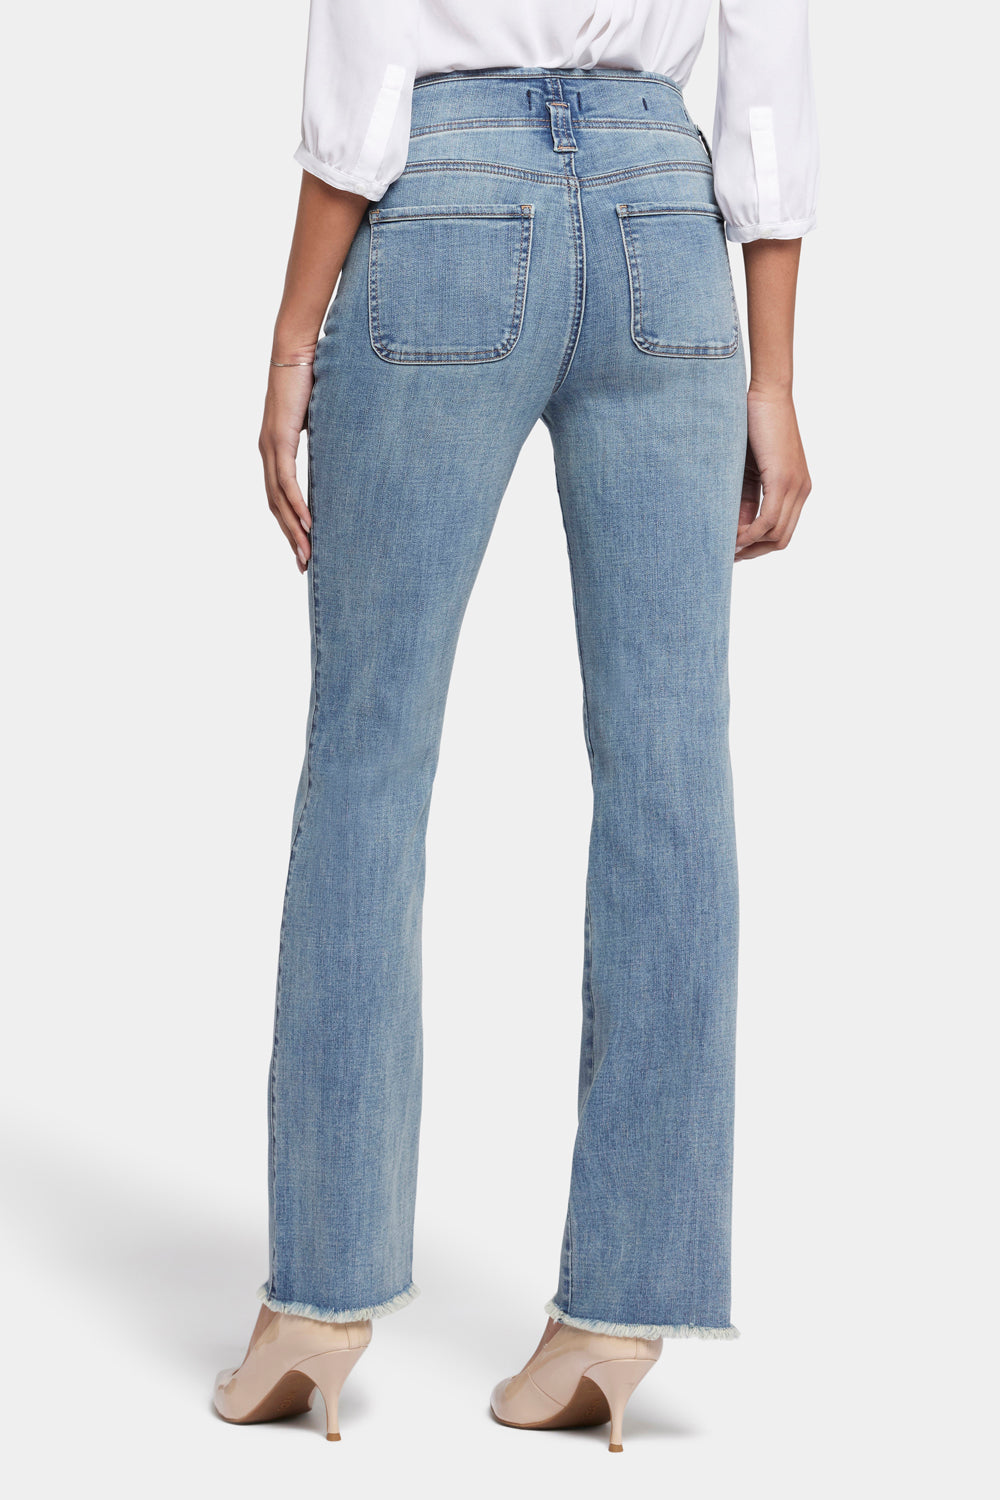 NYDJ Marilyn Straight Jeans  With Frayed Hems - Paddington